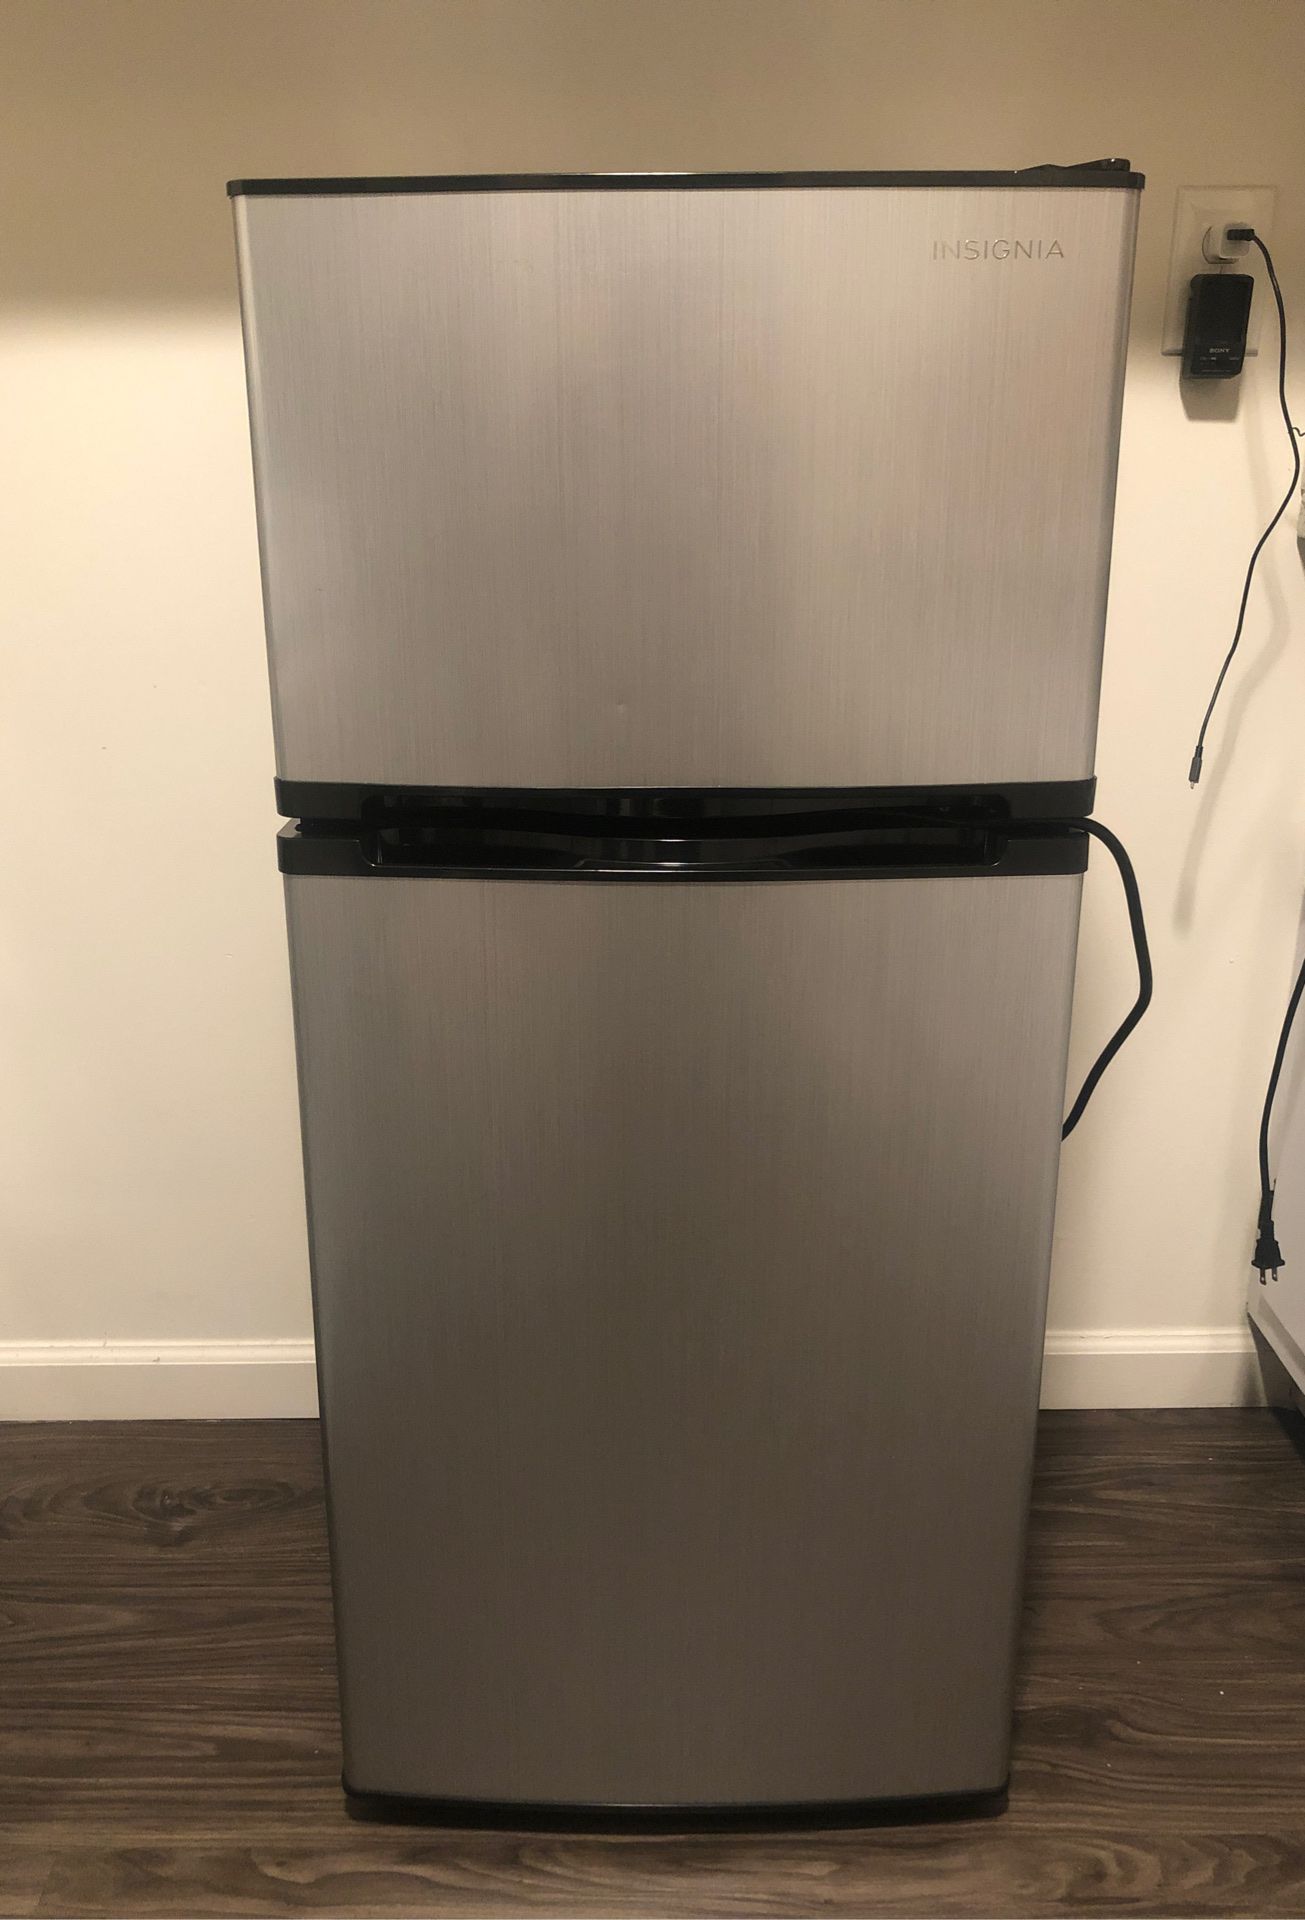 Insignia mini fridge with freezer